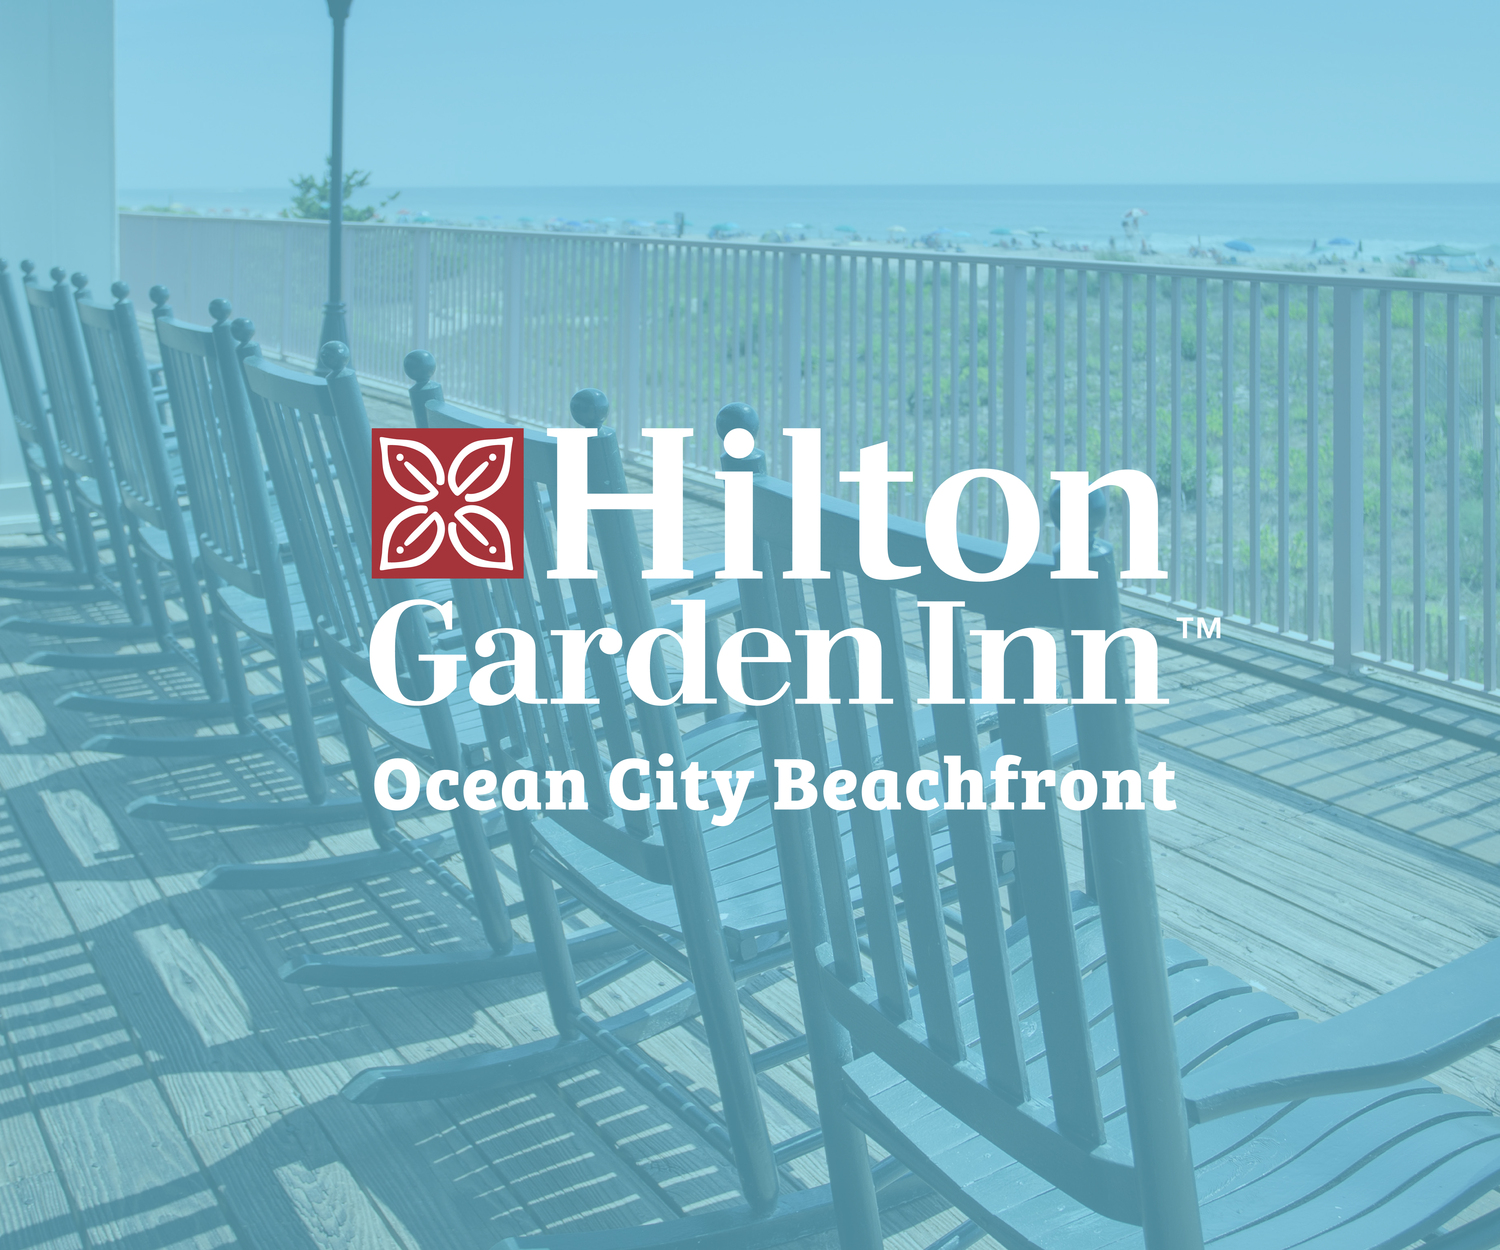 Dunes Manor Under Renovation, to Rebrand as Hilton Garden Inn 